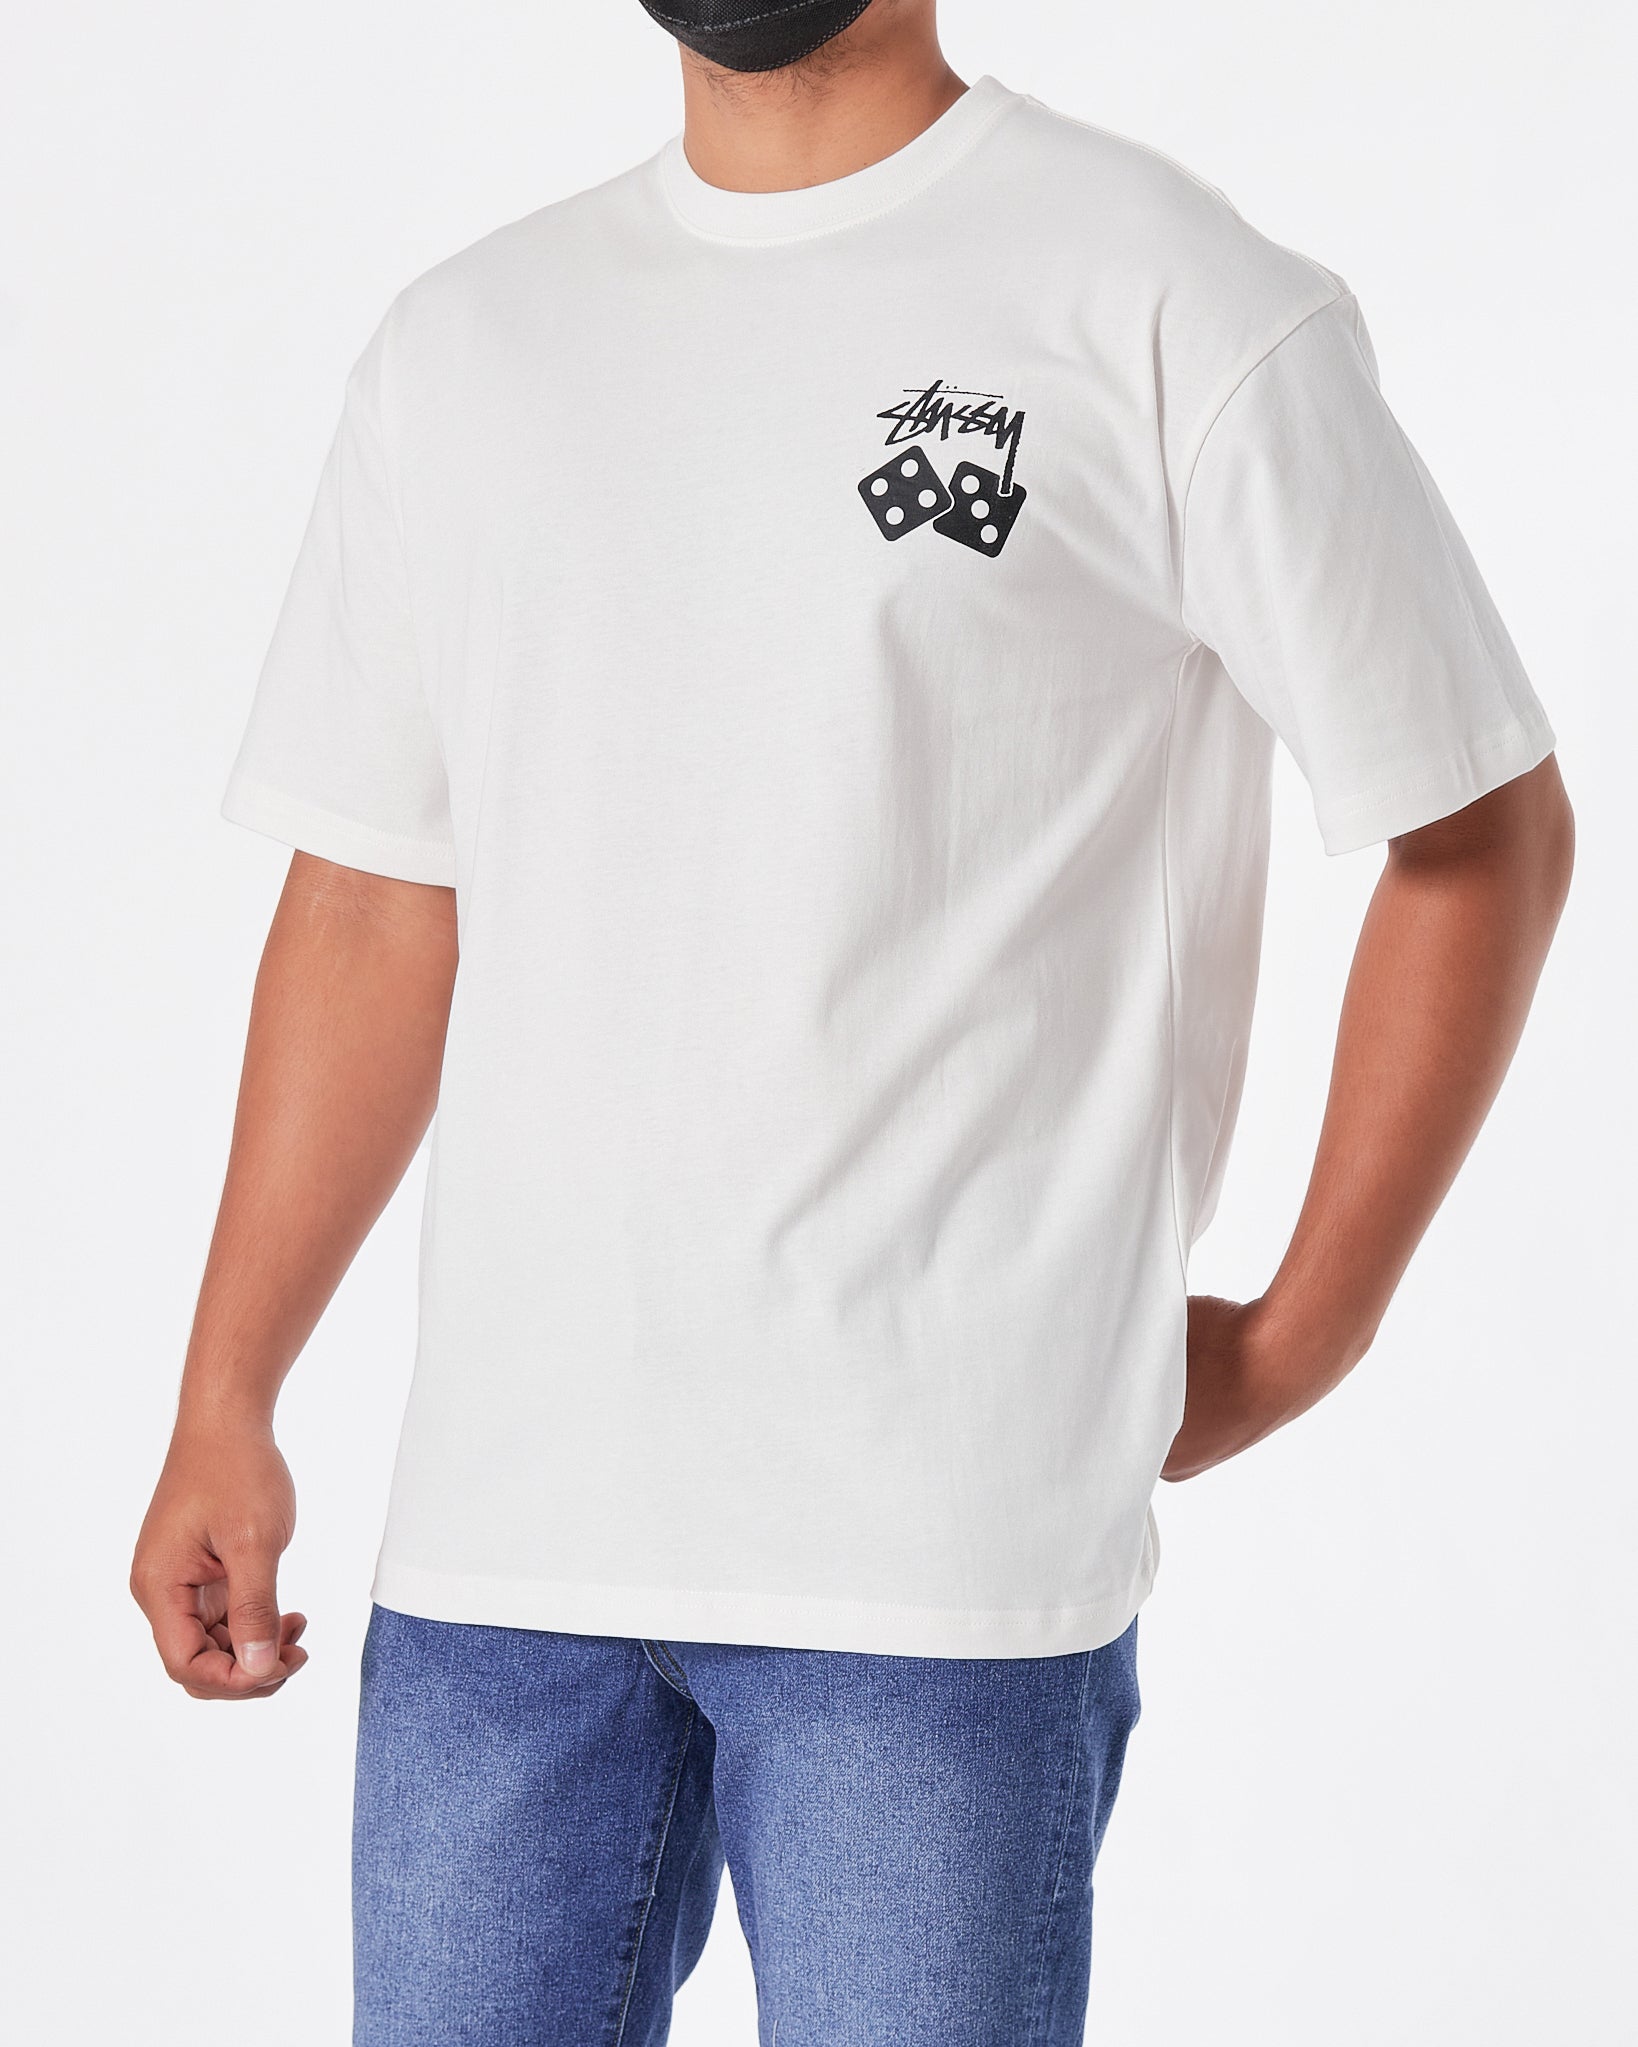 STU Dice Back Logo Printed Men White T-Shirt 22.90